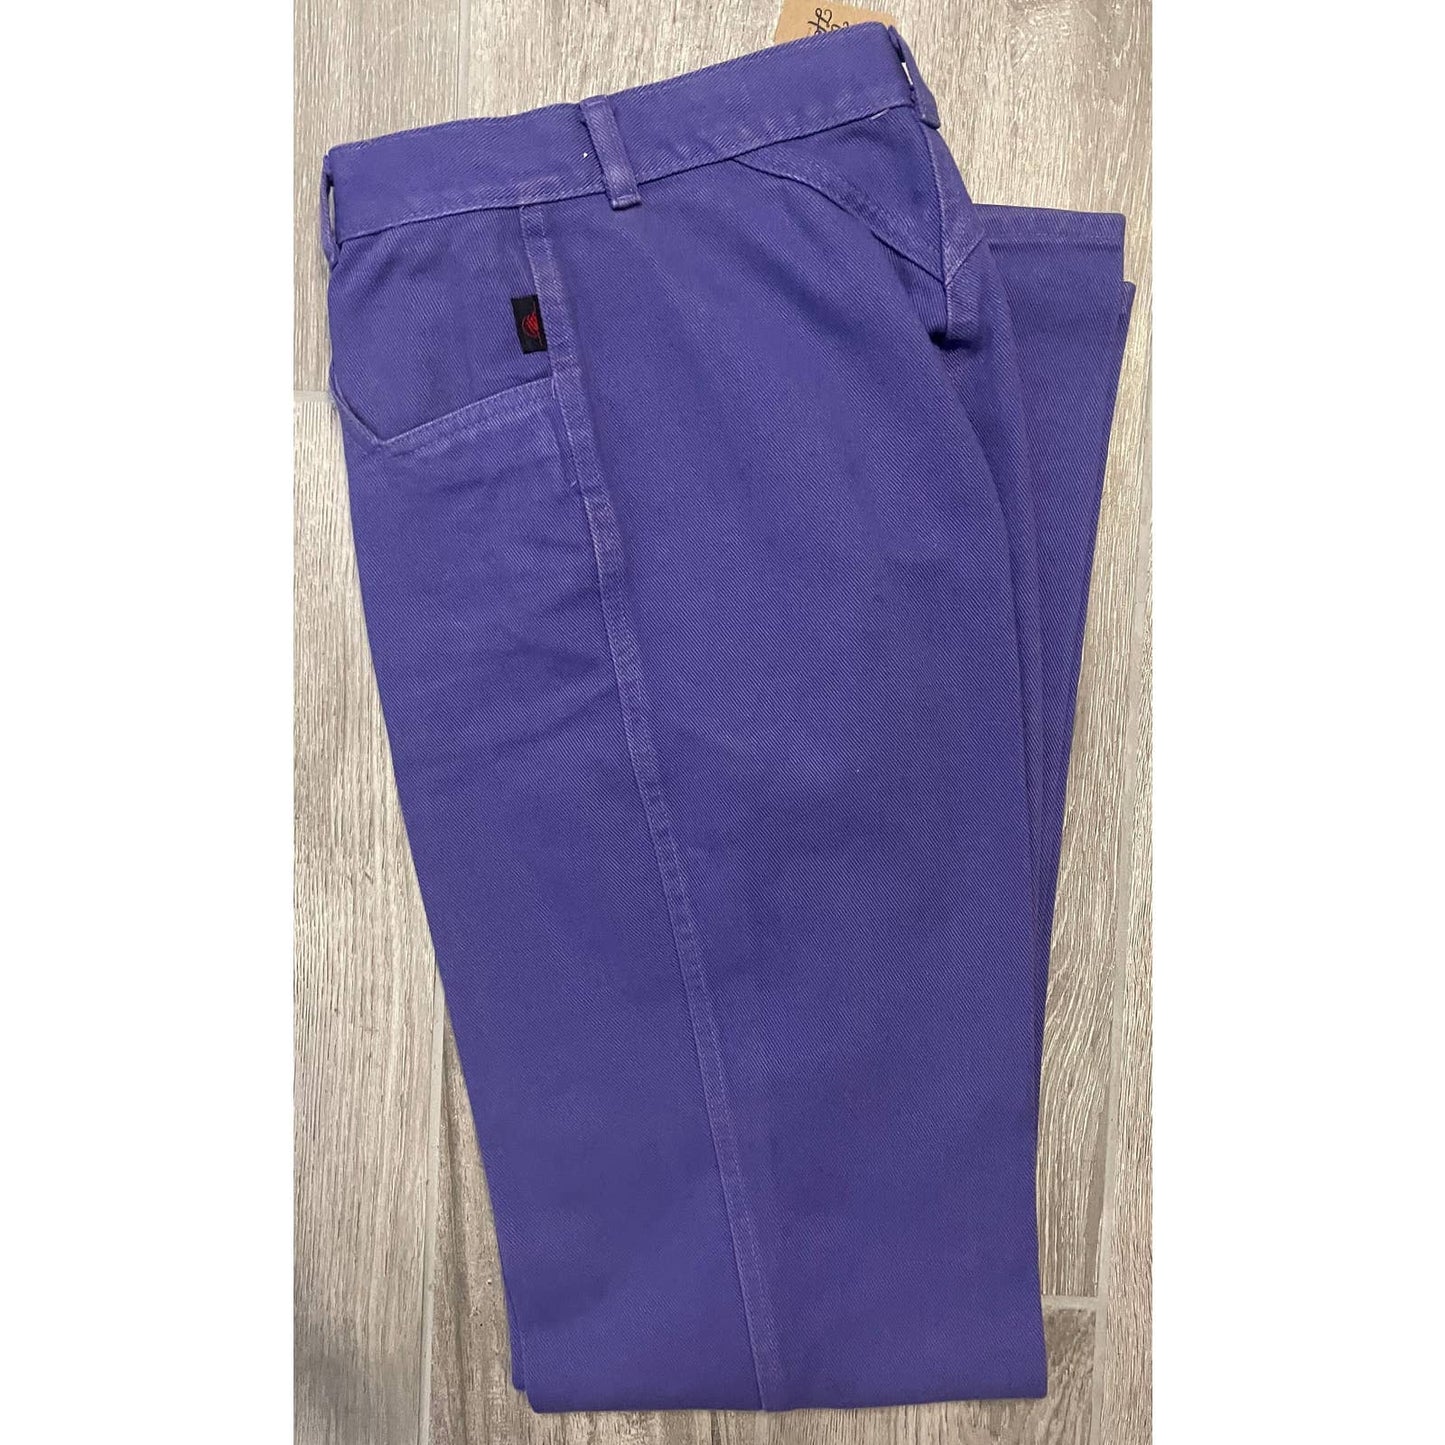 Vintage Rocky Mountain Light Purple Denim Jeans